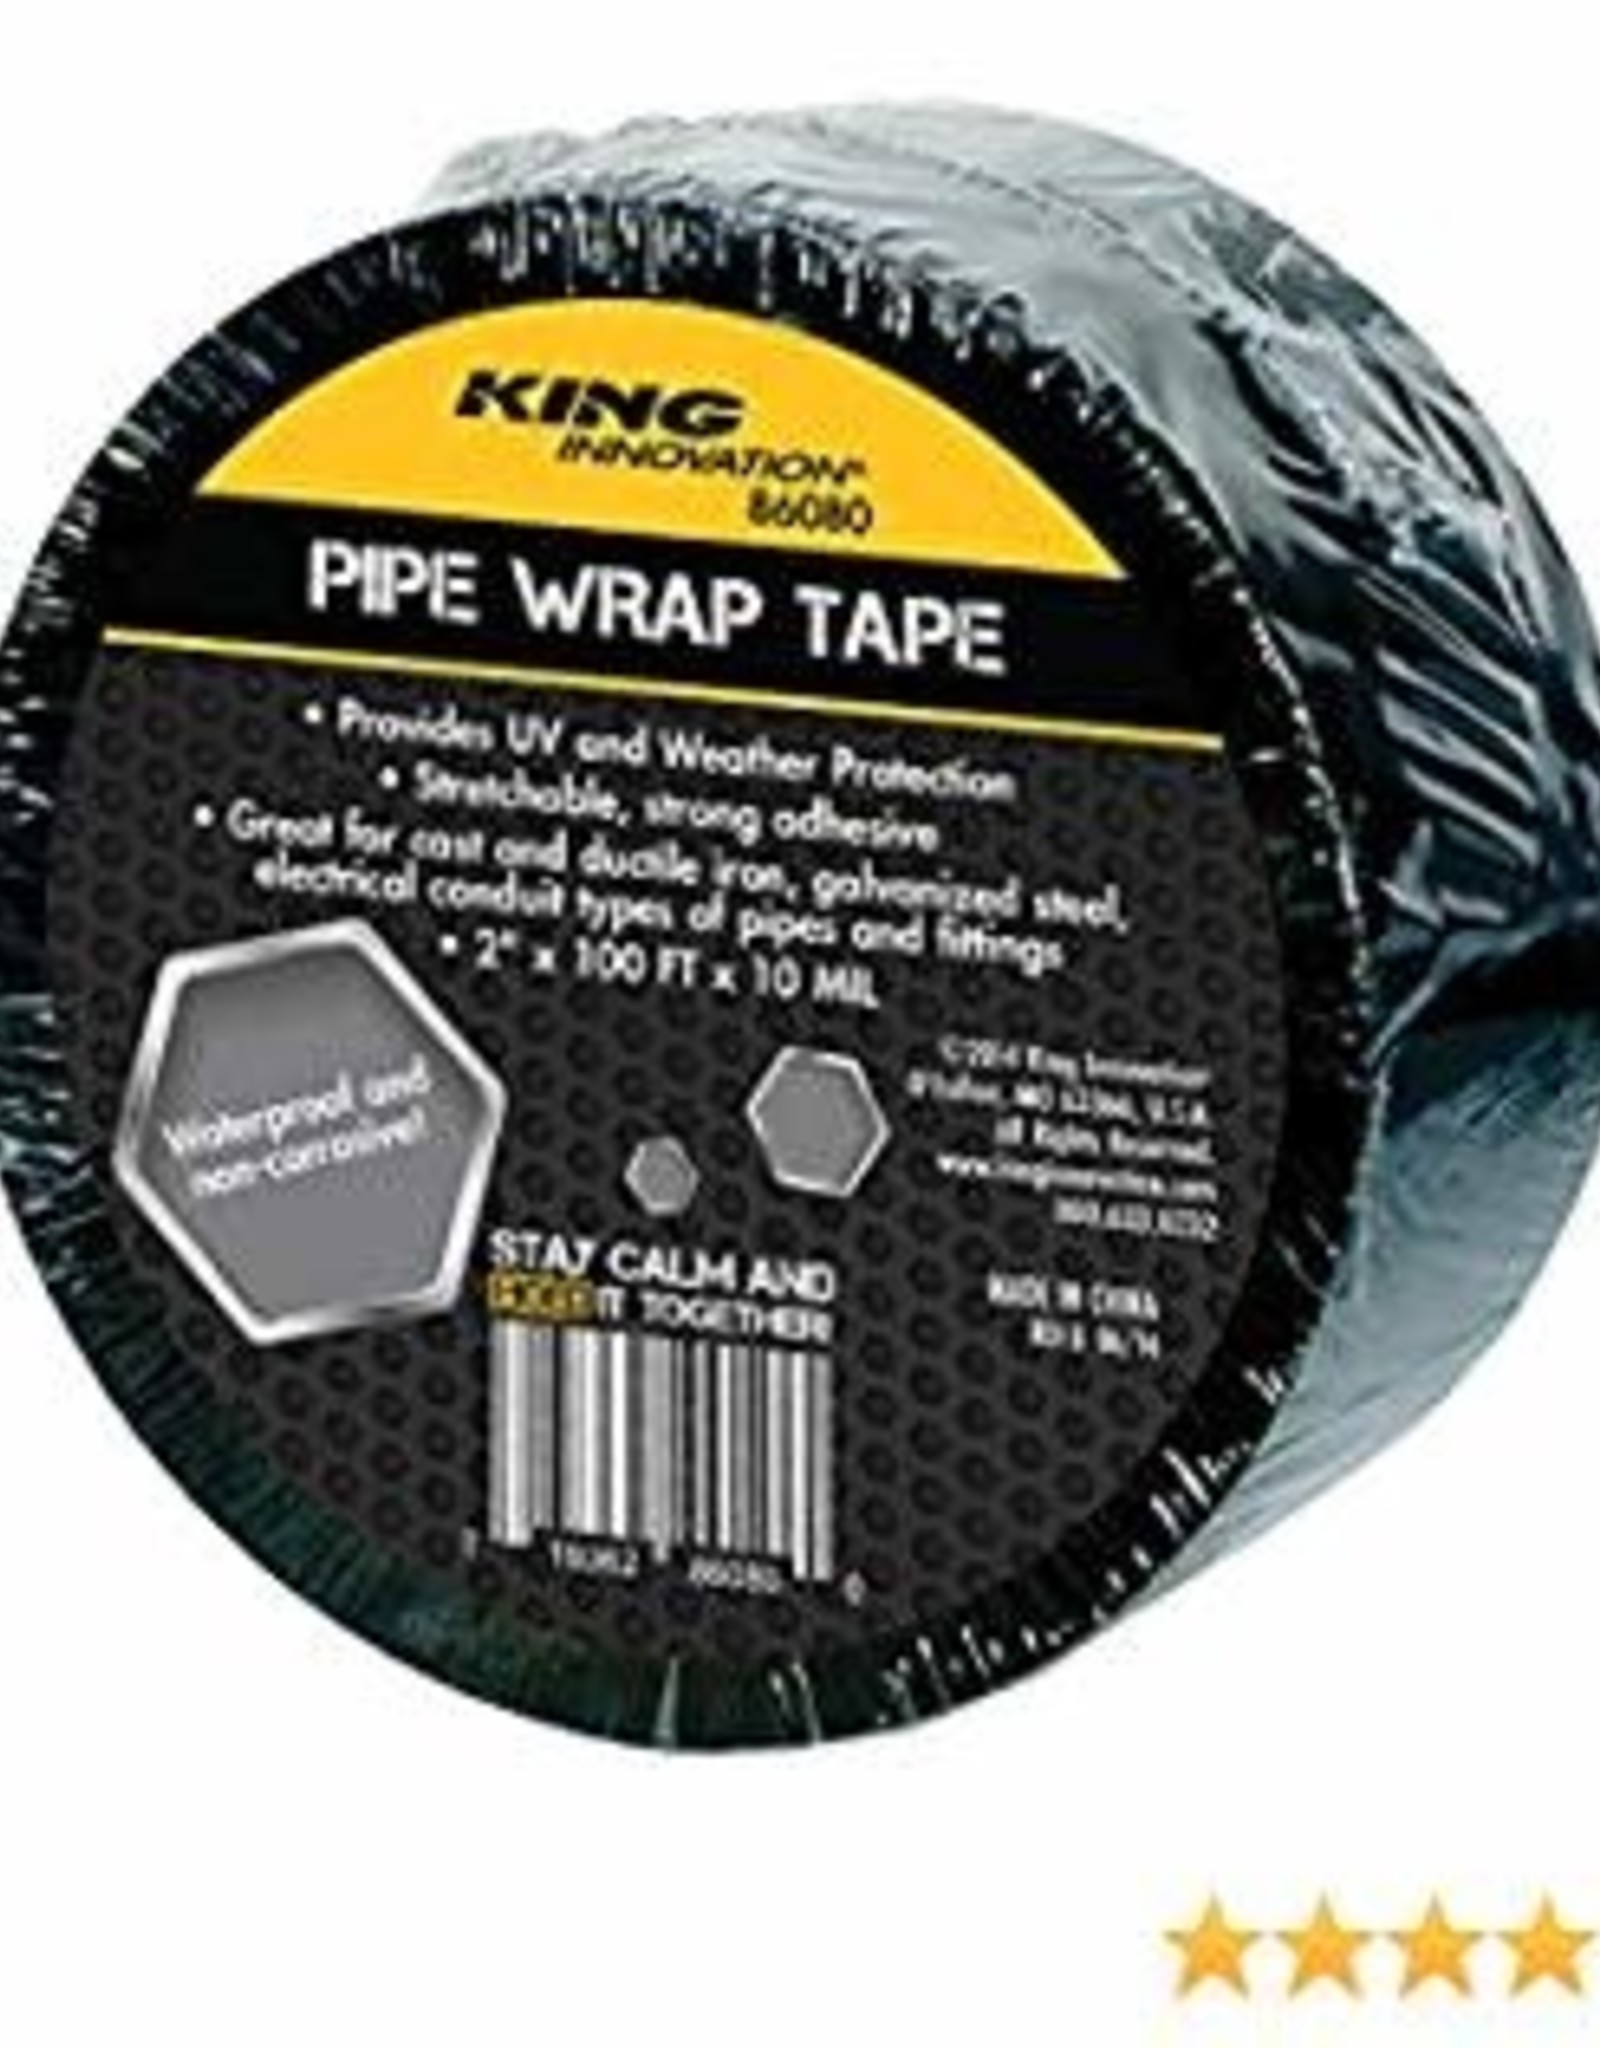 King Innovation King Innovation Pipe Wrap Tape